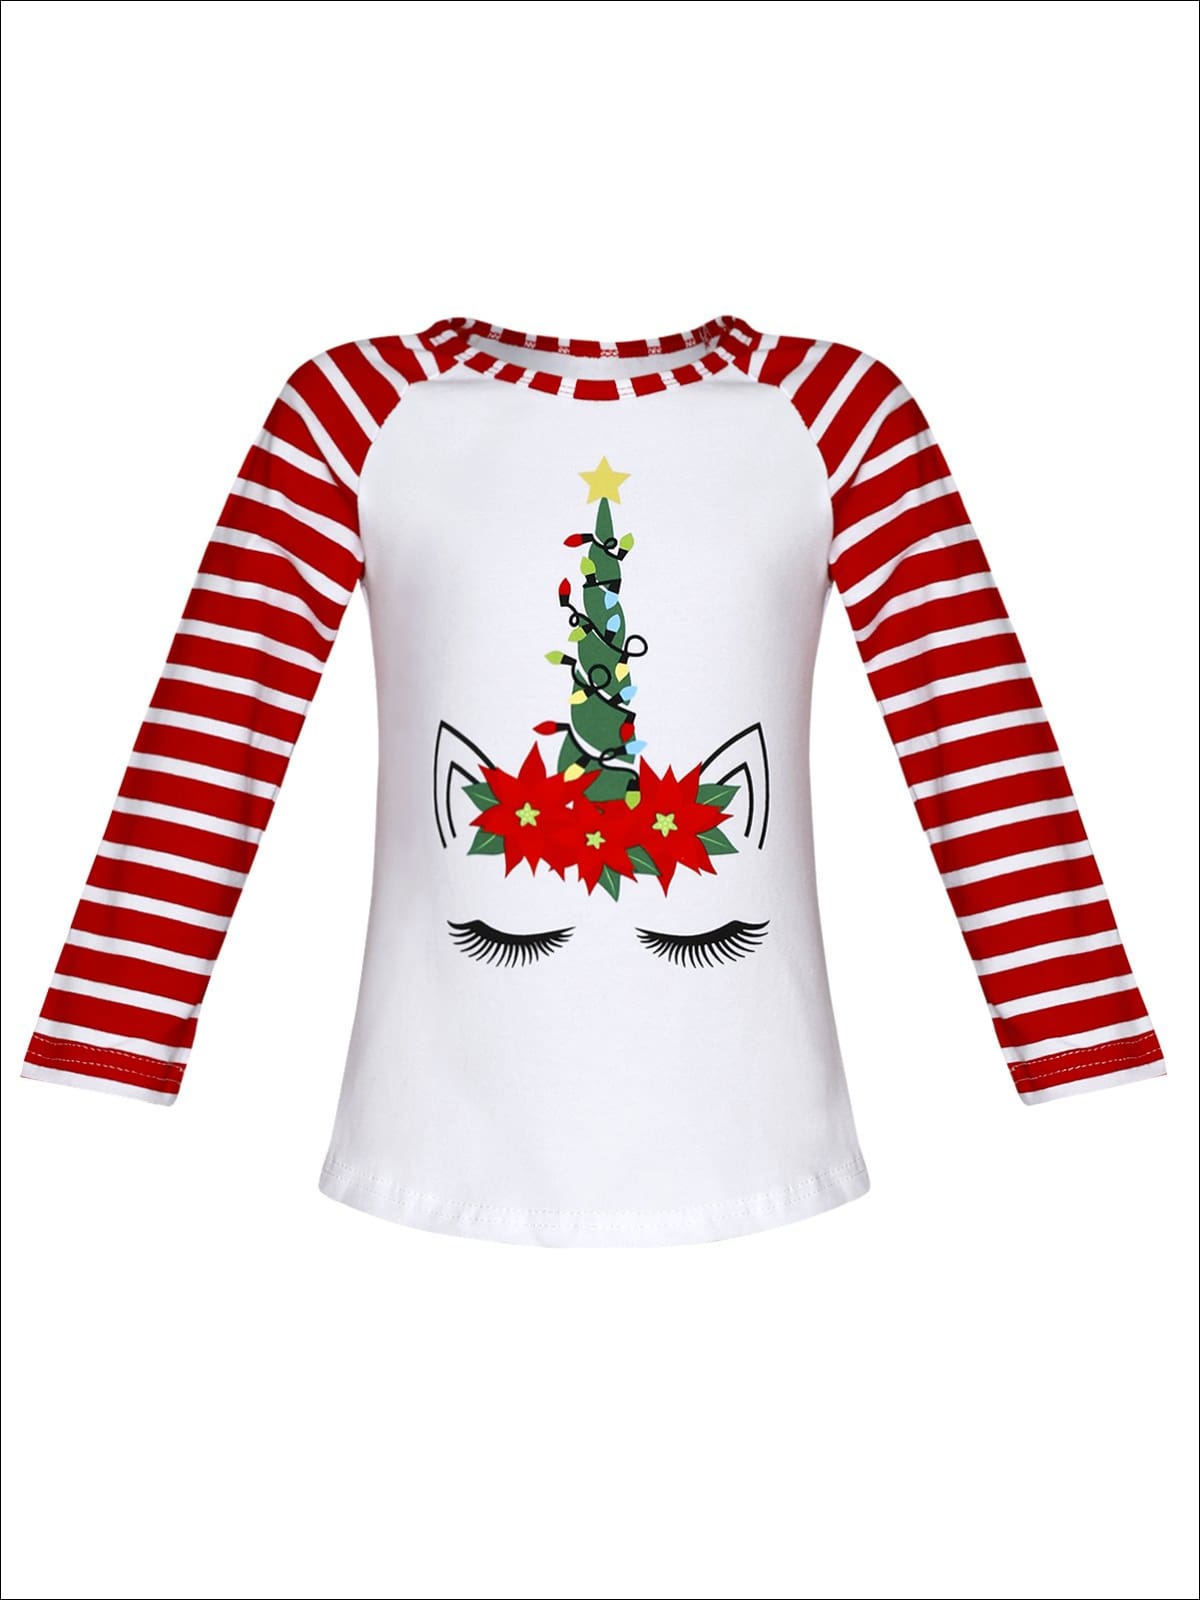 Girls Christmas Themed Long Striped Raglan Sleeve Unicorn Top - White / XS-2T - Girls Christmas Top